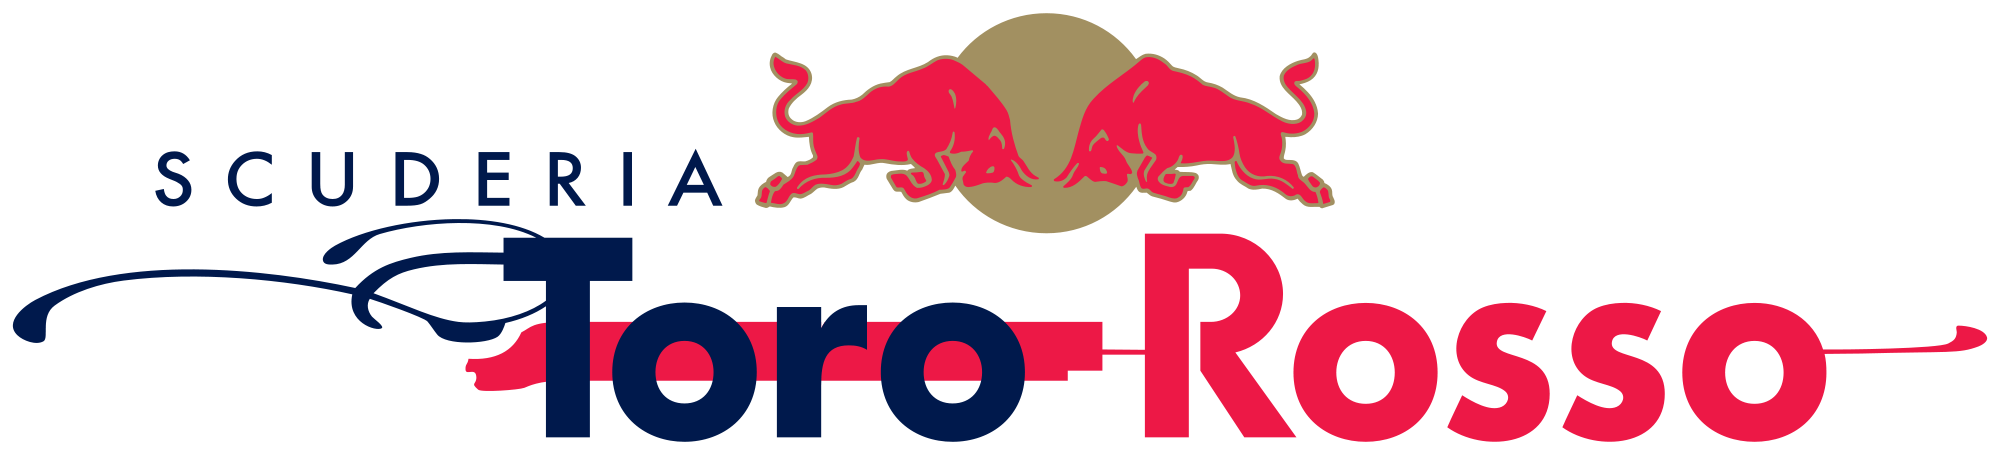 Scuderia_Toro_Rosso_logo.png